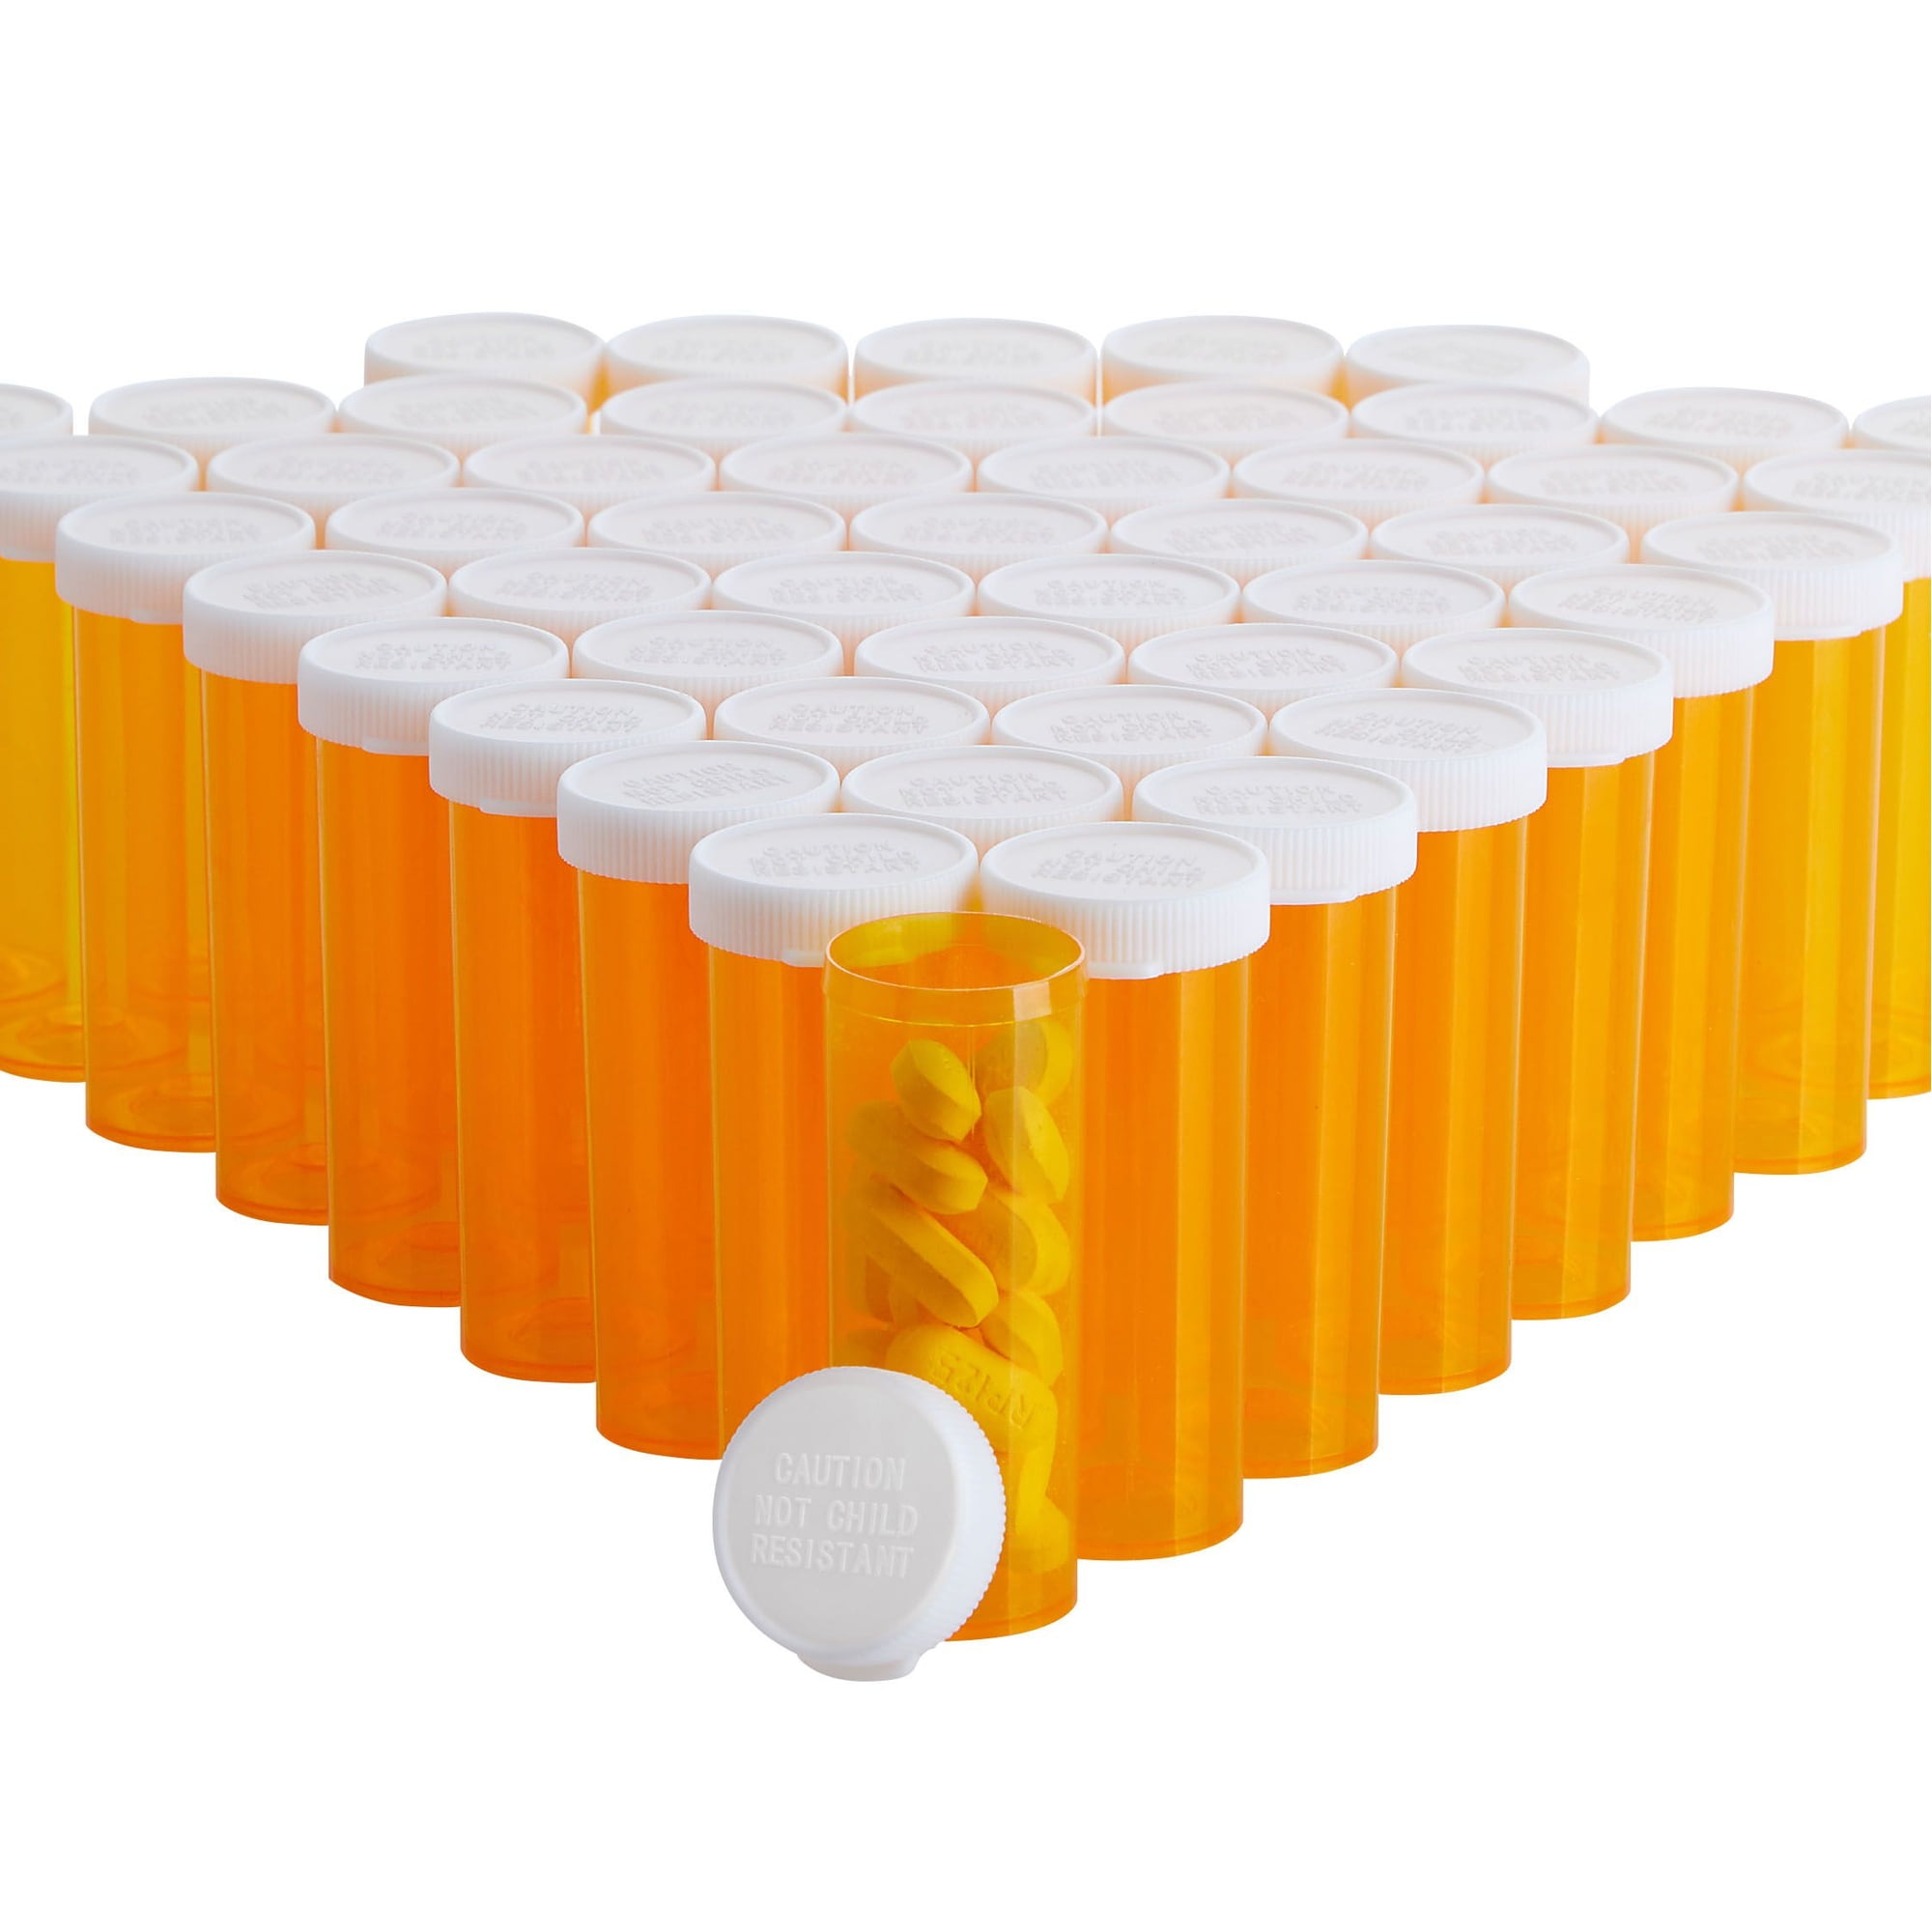 Large Pill Bottle Organizer, Travel Medicine Storage Case with